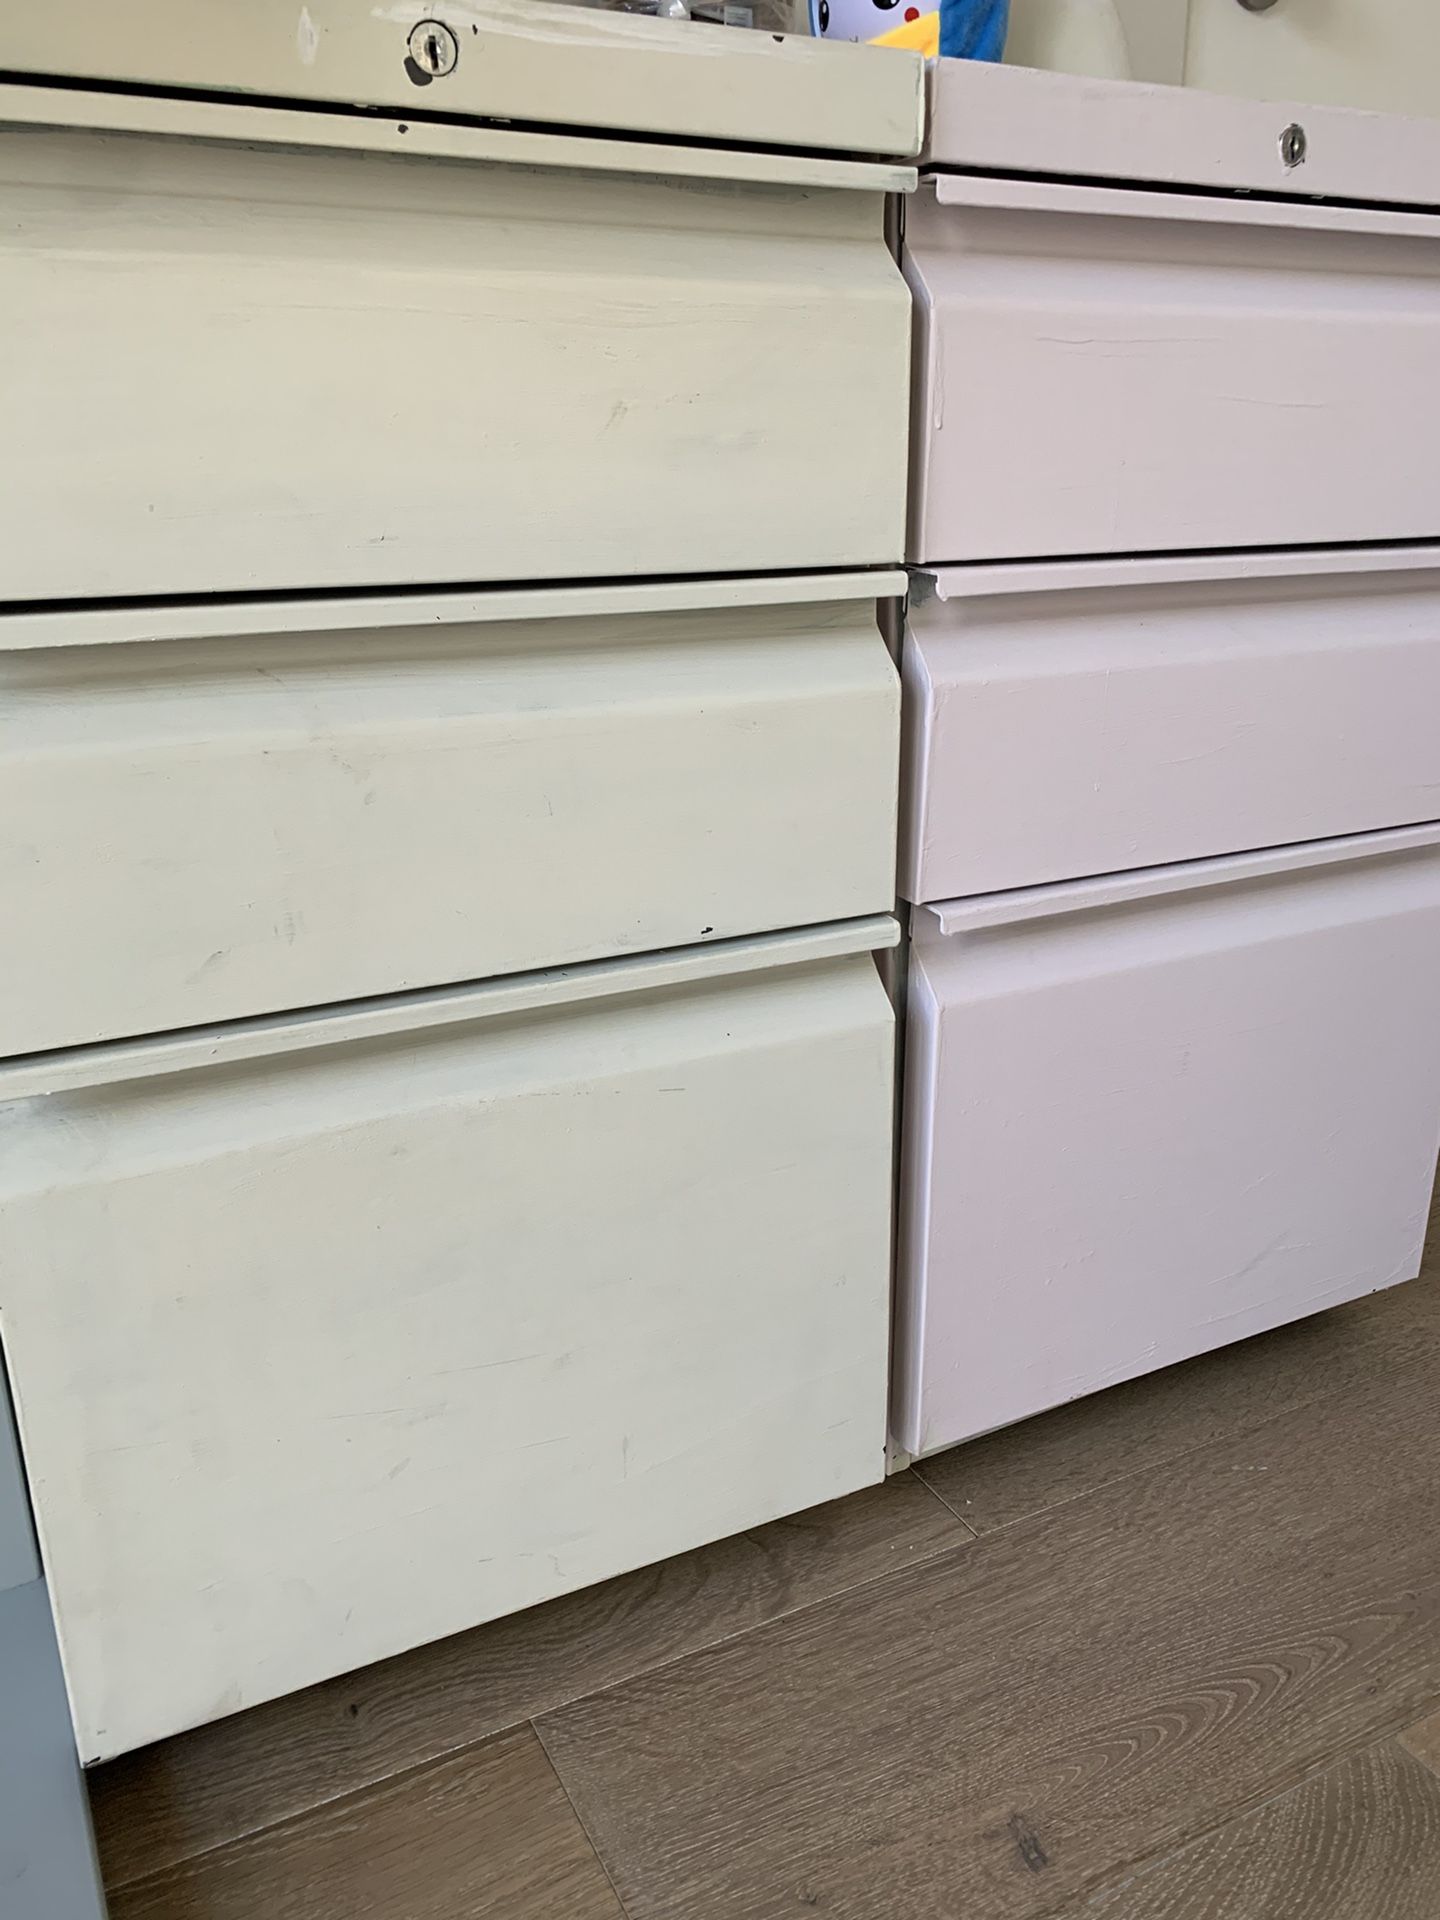 2 file cabinets